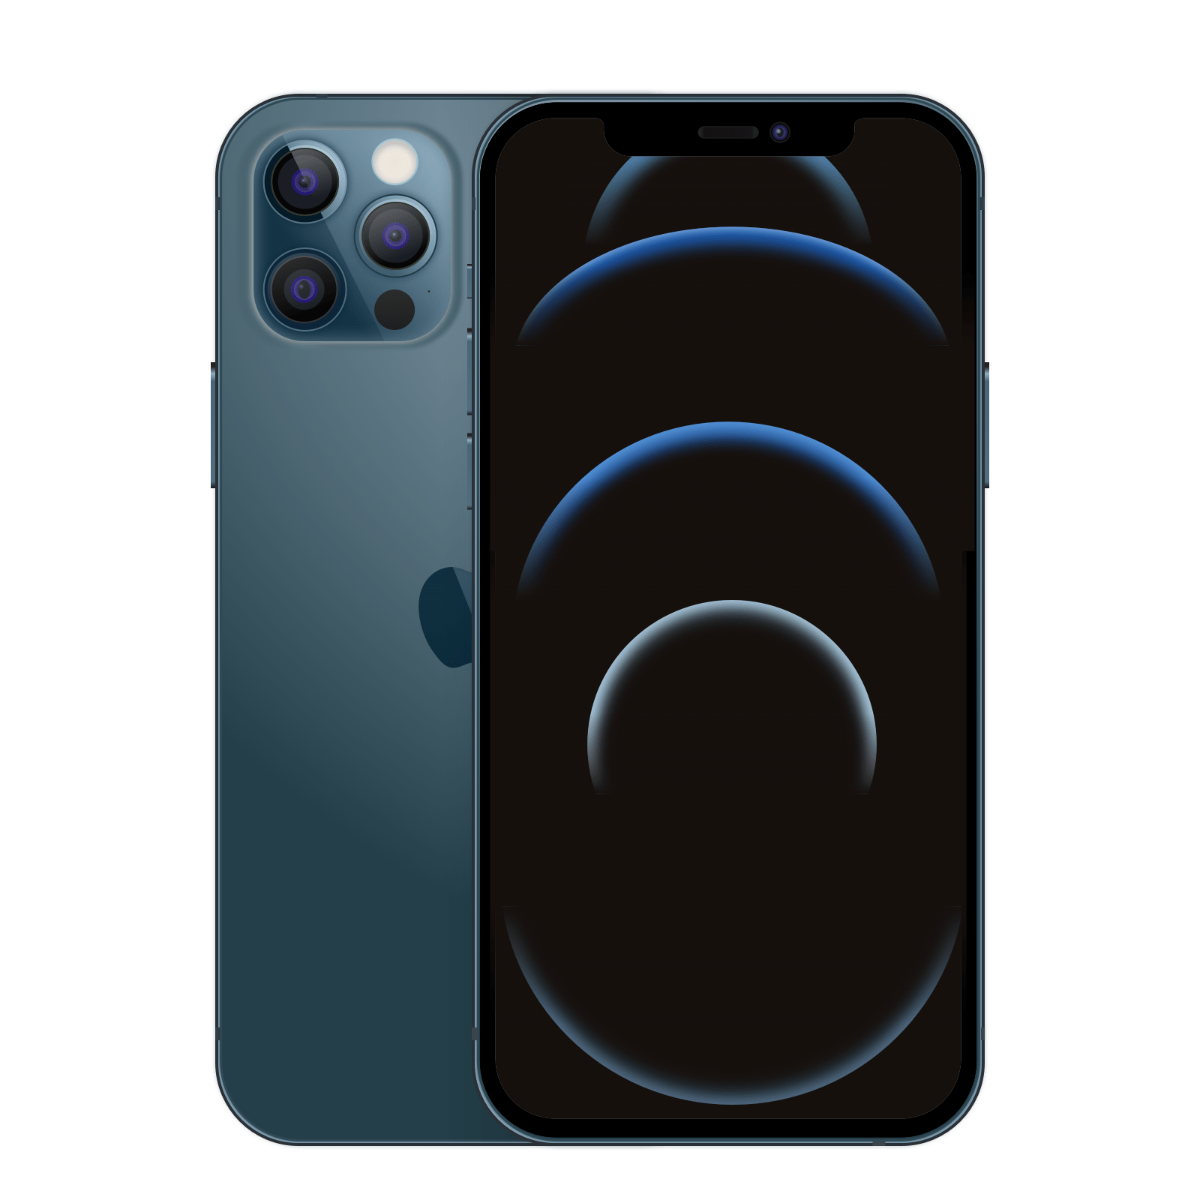 Apple iPhone 12 Pro 128 GB – Pazifikblau (Zustand: Neuwertig)